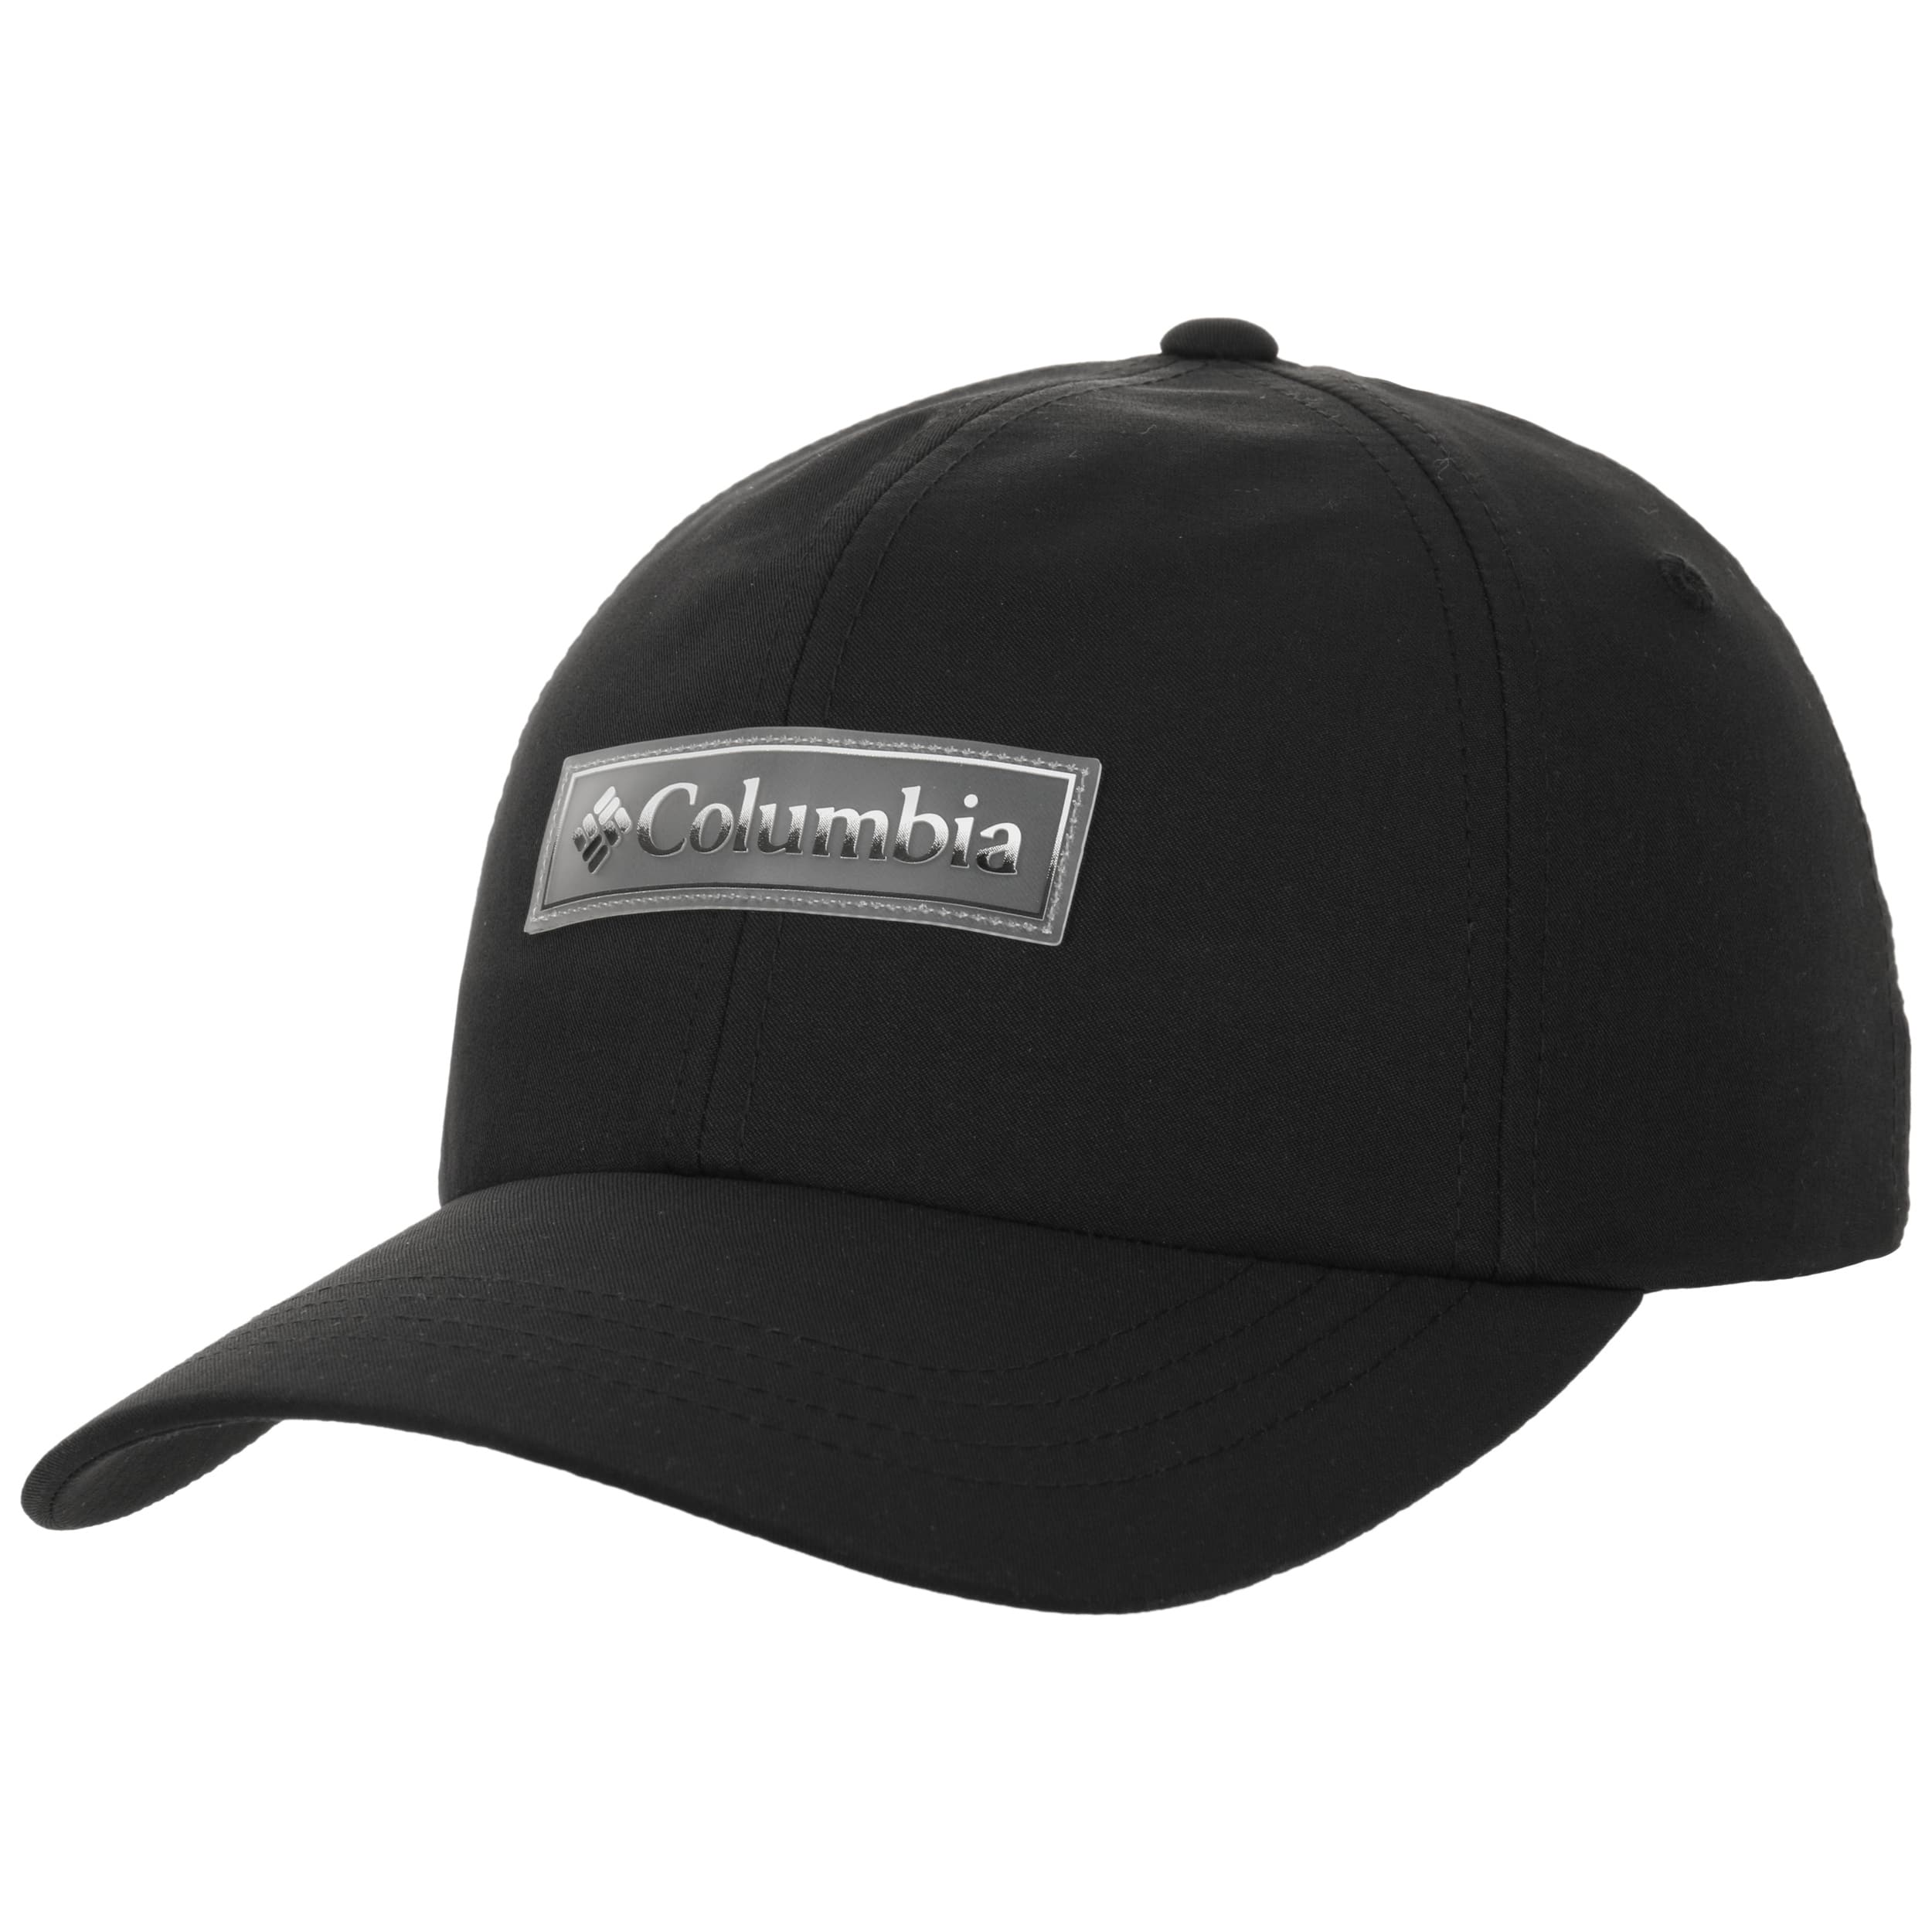 Classic Summer Cap by bugatti --> Shop Hats, Beanies & Caps online ▷  Hatshopping